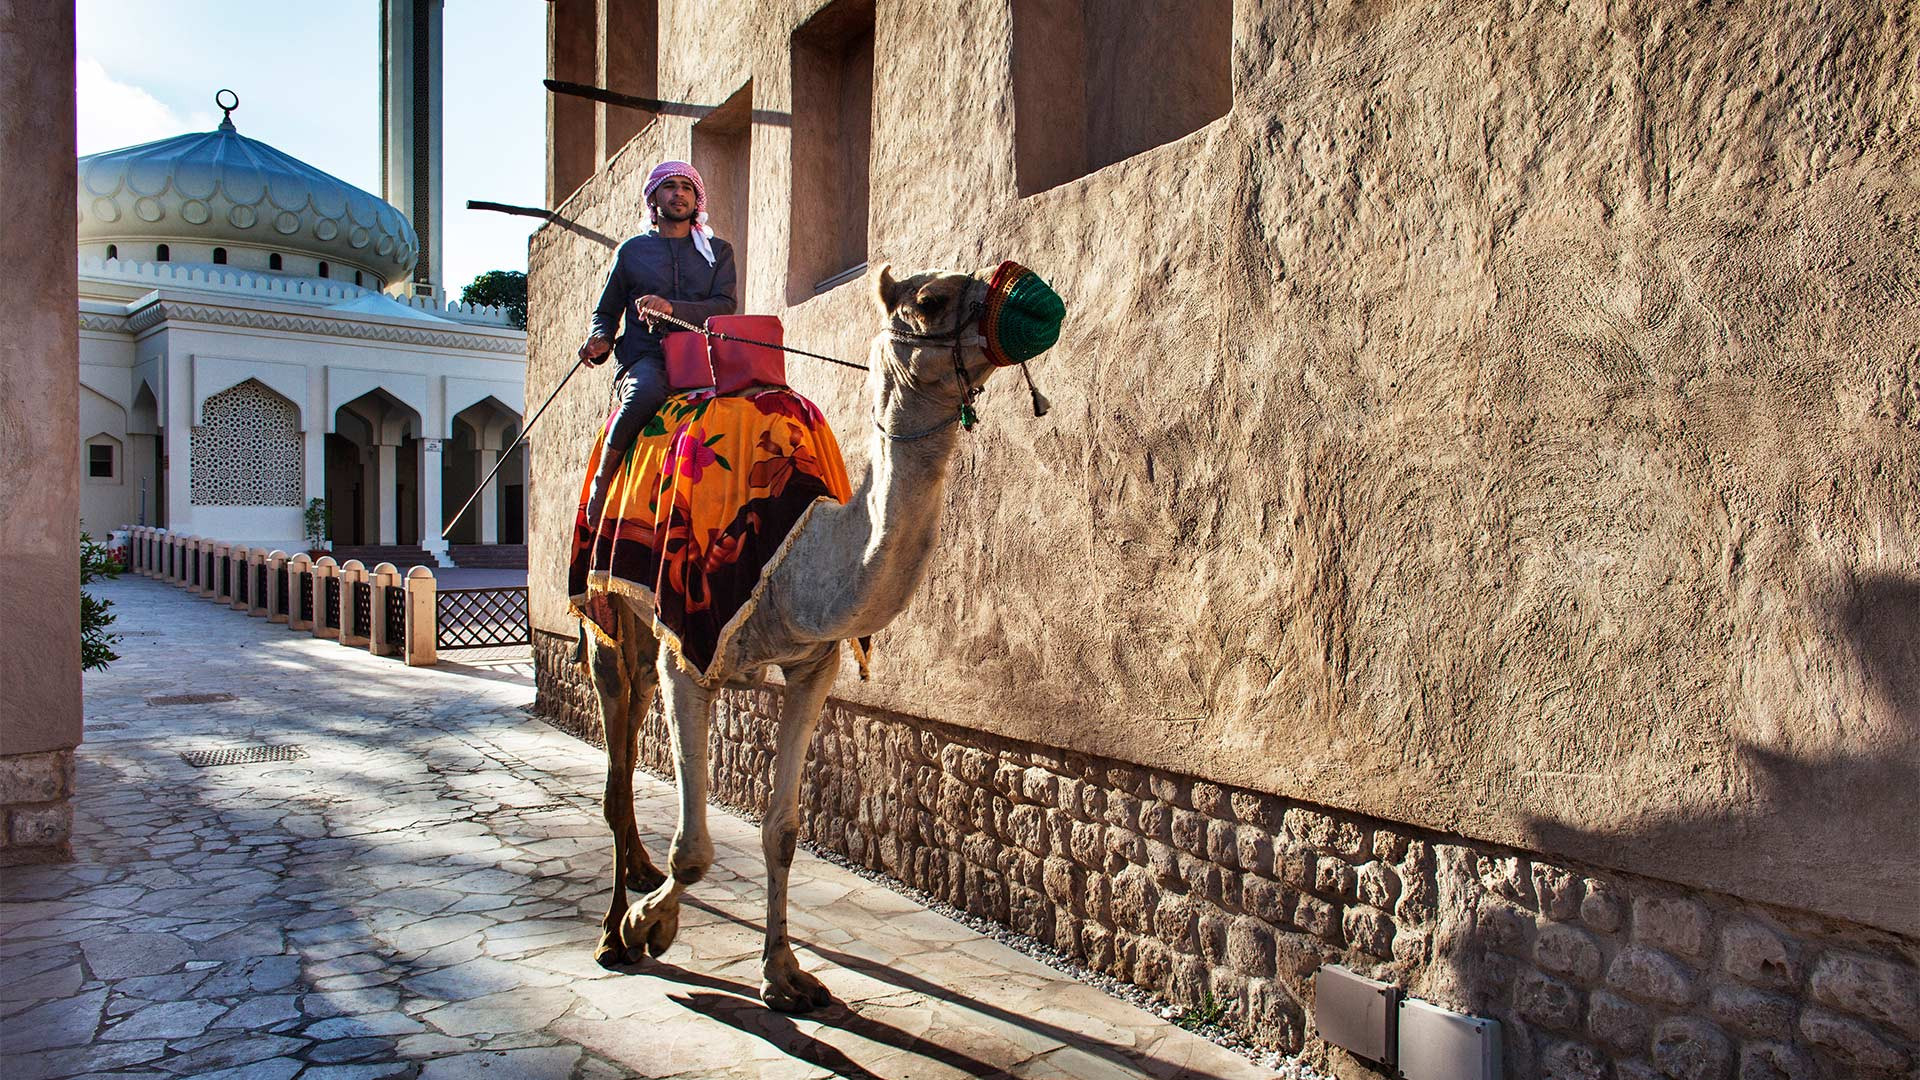 Camel riding in Old Dubai